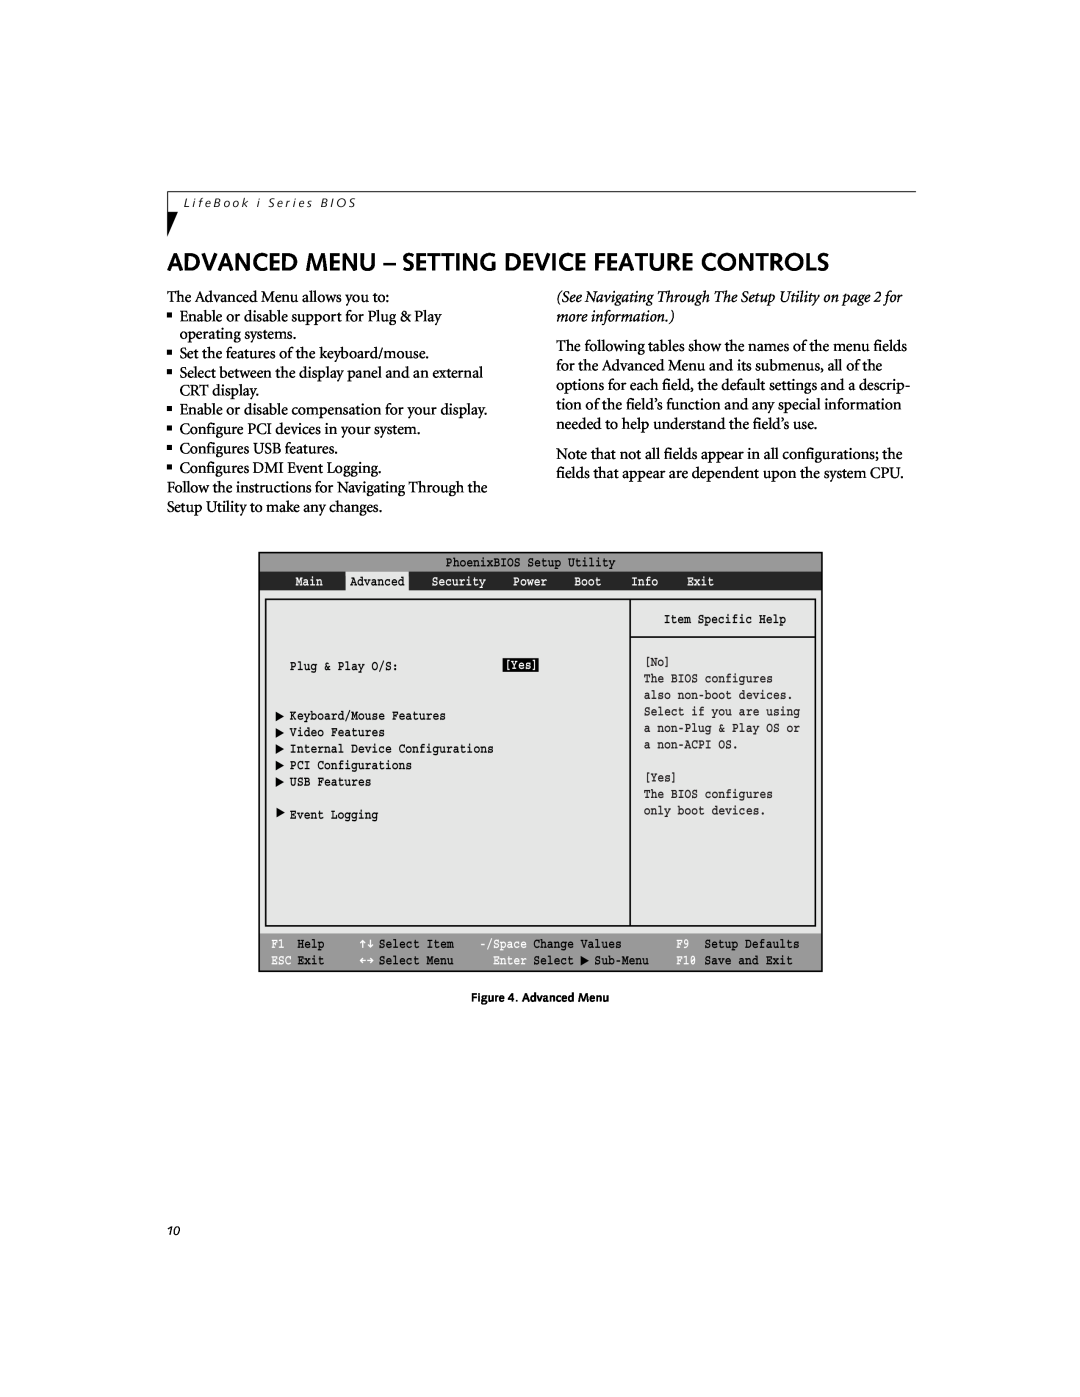 Fujitsu Siemens Computers i Series manual Advanced Menu - Setting Device Feature Controls 